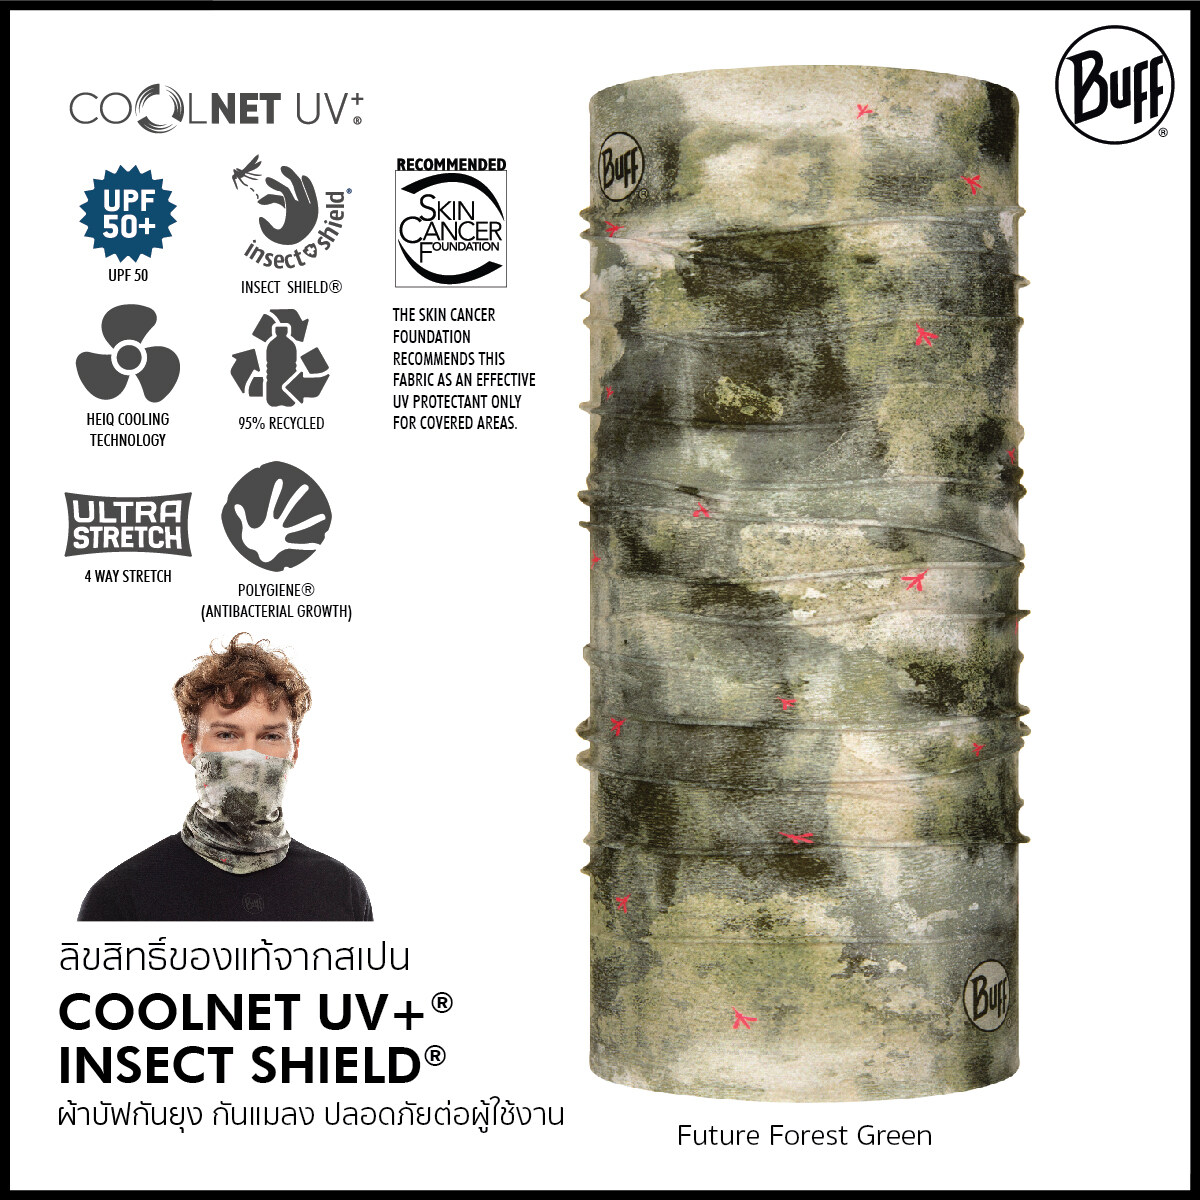 Buff Coolnet UV+ Insect Shield ผ้าบัฟกันแมลง ผ้าบัฟกันแดด Neckwear Sun Protection ผ้าเบาใส่เย็นสบายไม่อับร้อน เหมาะกับฤดูร้อน ลิขสิทธิ์แท้ Made in Spain